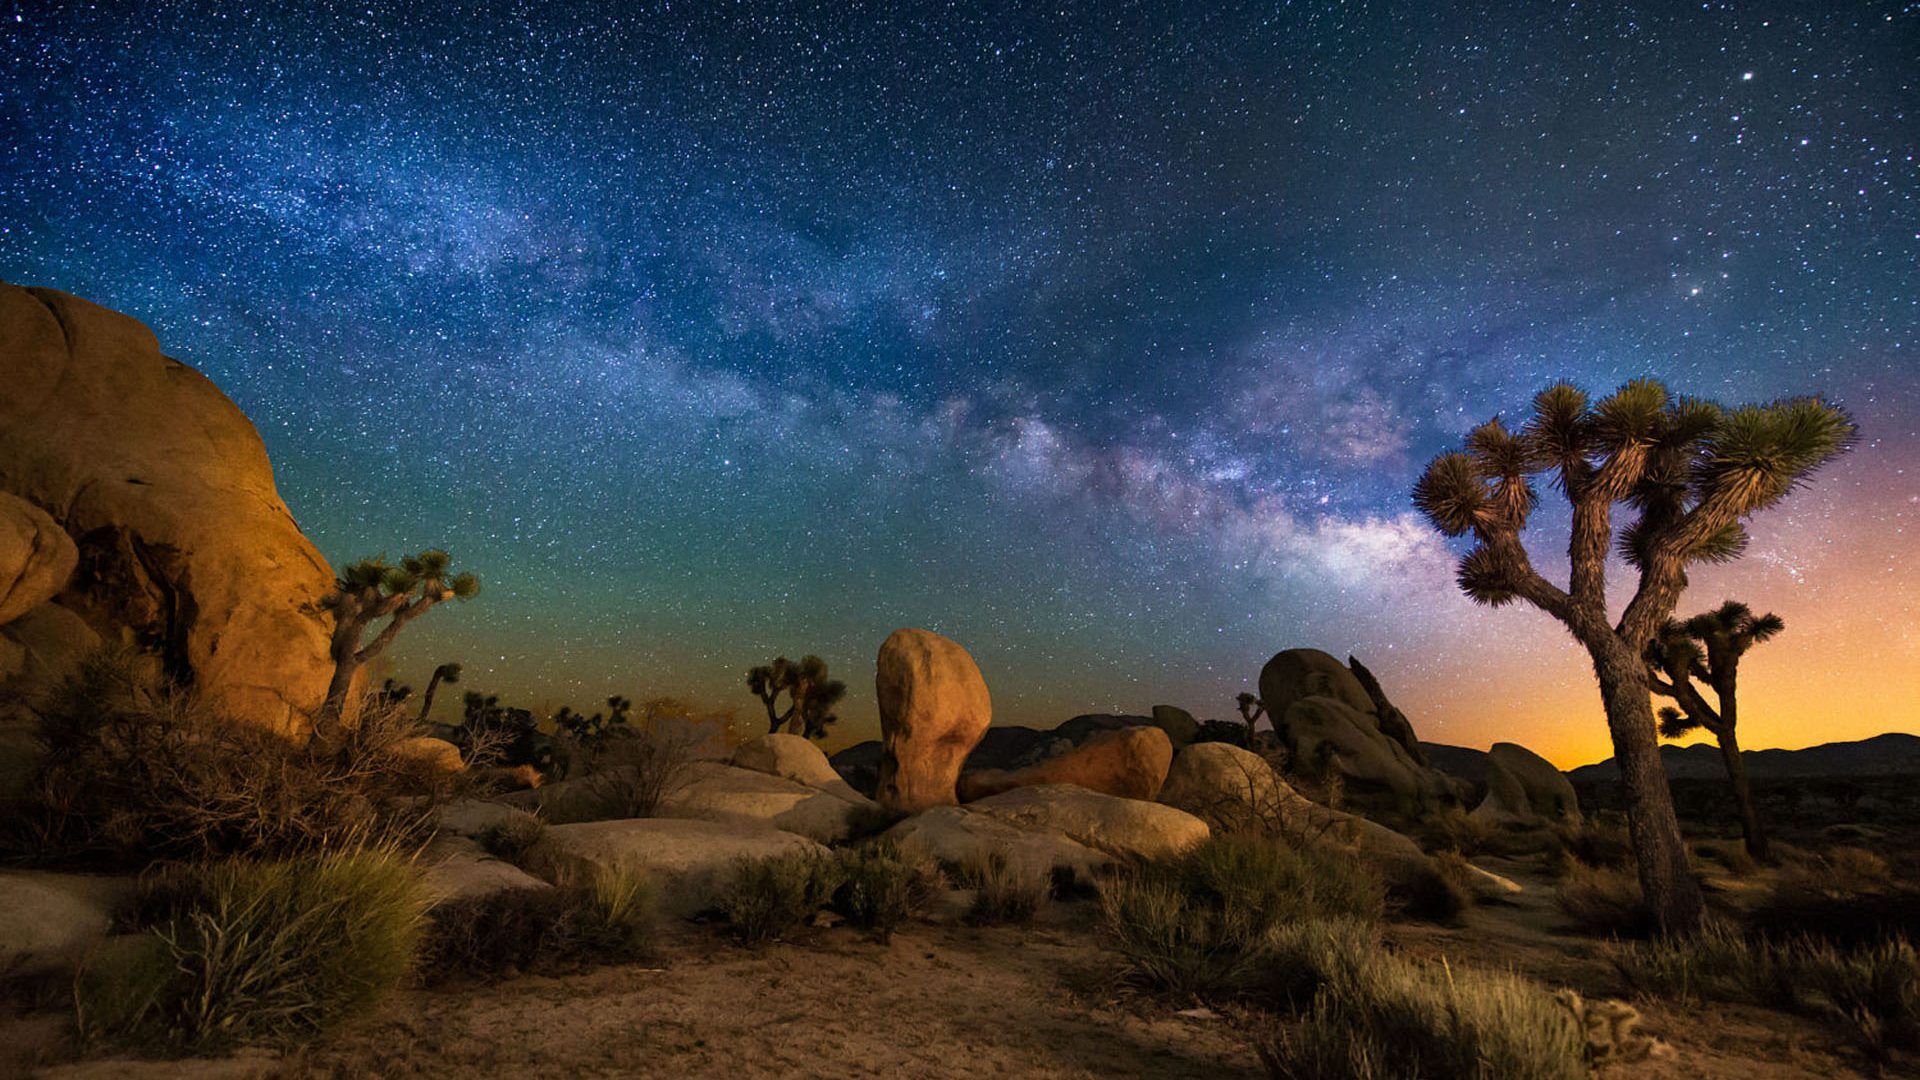 Starry Sky Desert Area Night In Joshua Tree National Park California Usa HD Wallpaper For Deskx1200, Wallpaper13.com